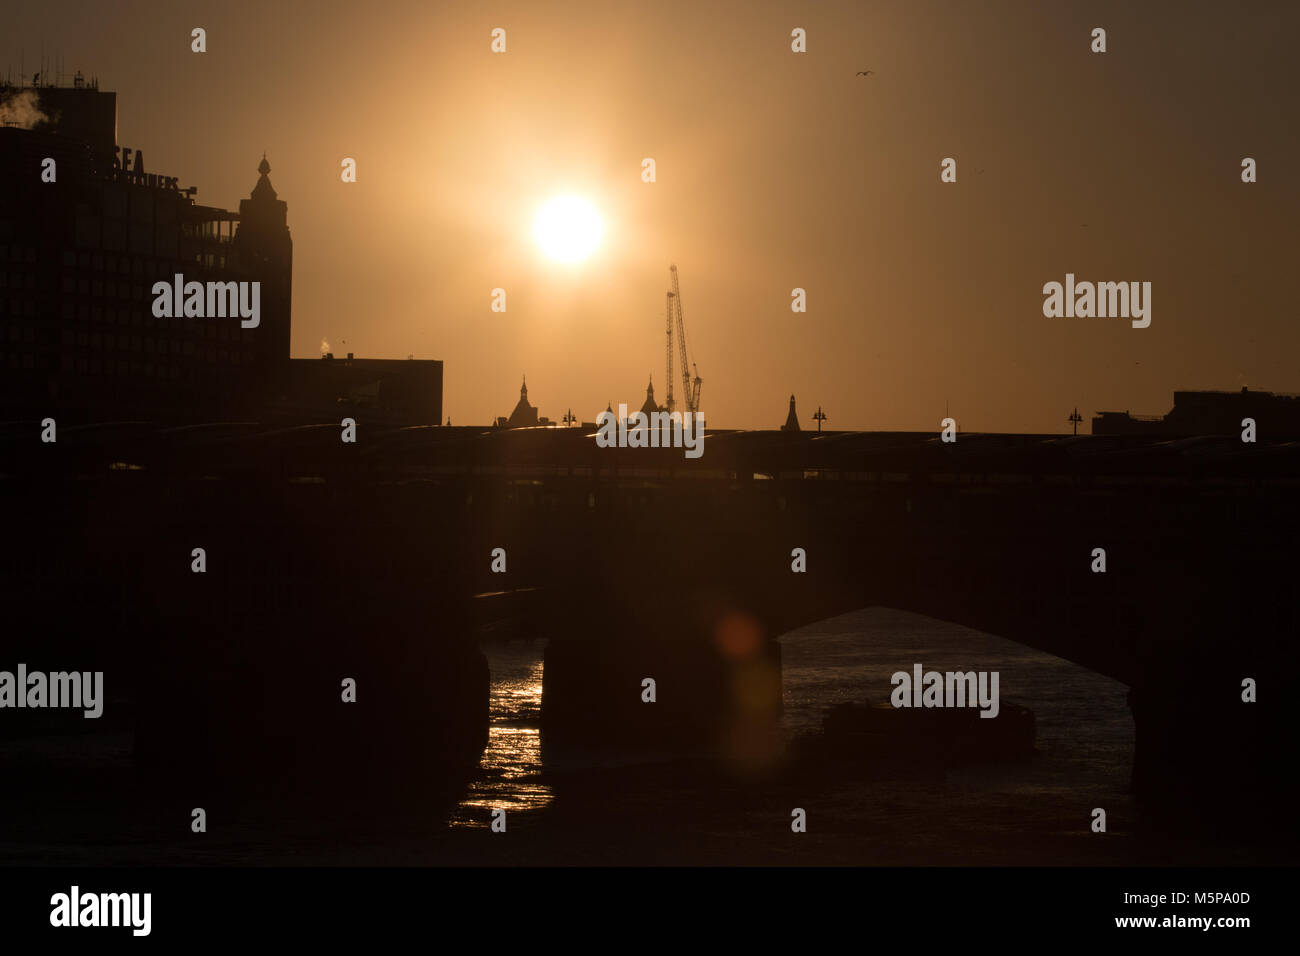 London, UK. 25th February 2018. Abeautiful sunset along the River Thames.  Credit: Carol Moir/Alamy Live News. Stock Photo